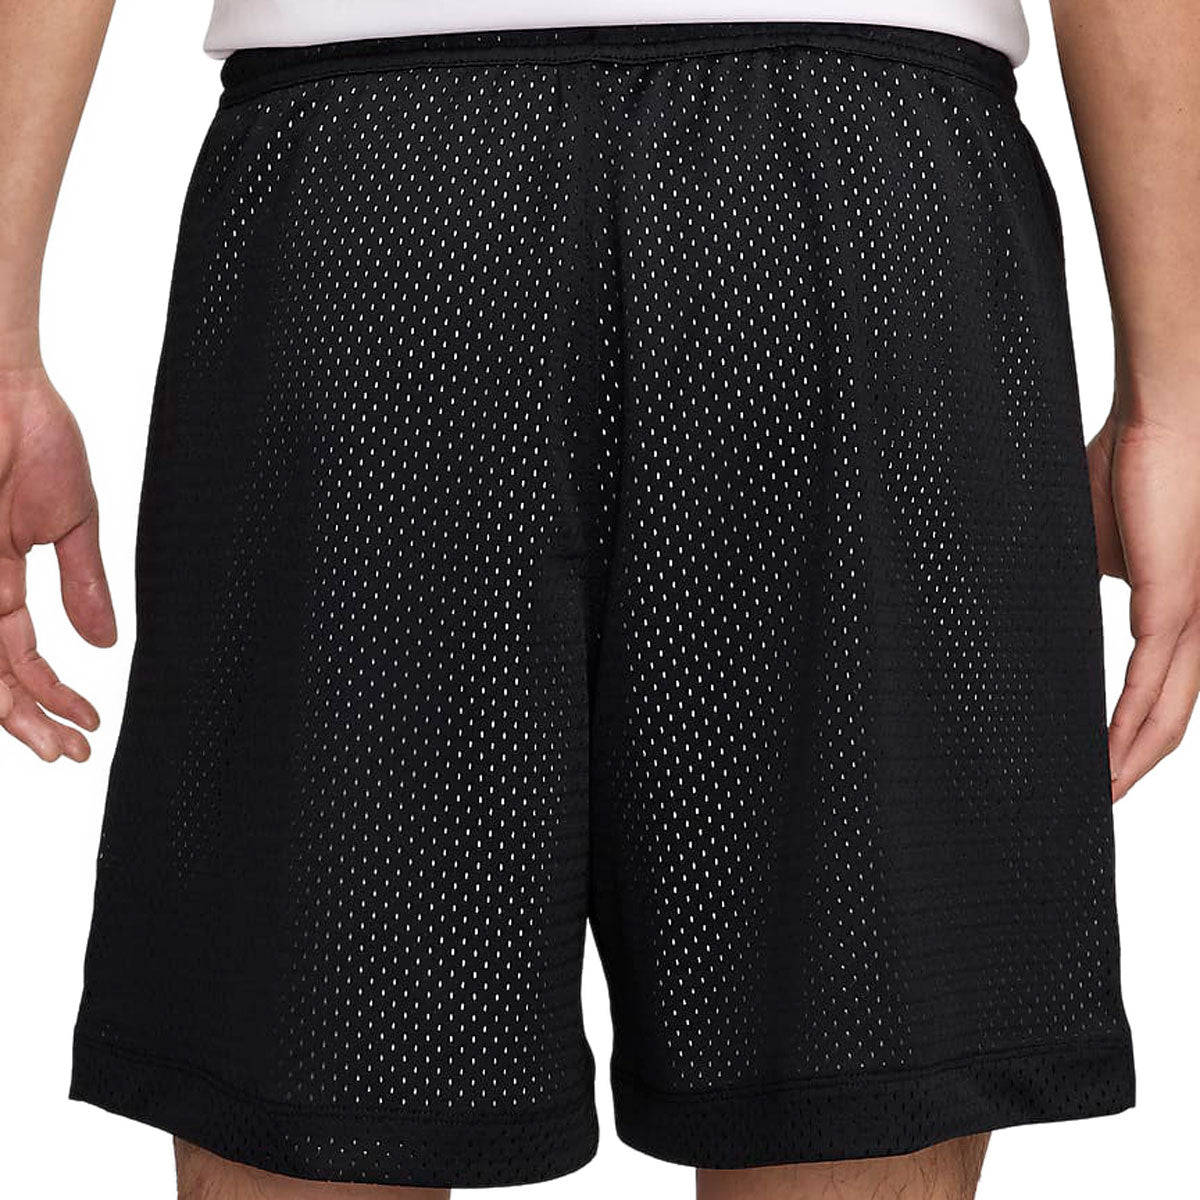 Nike SB Basketball Skate Shorts - Black/White image 3